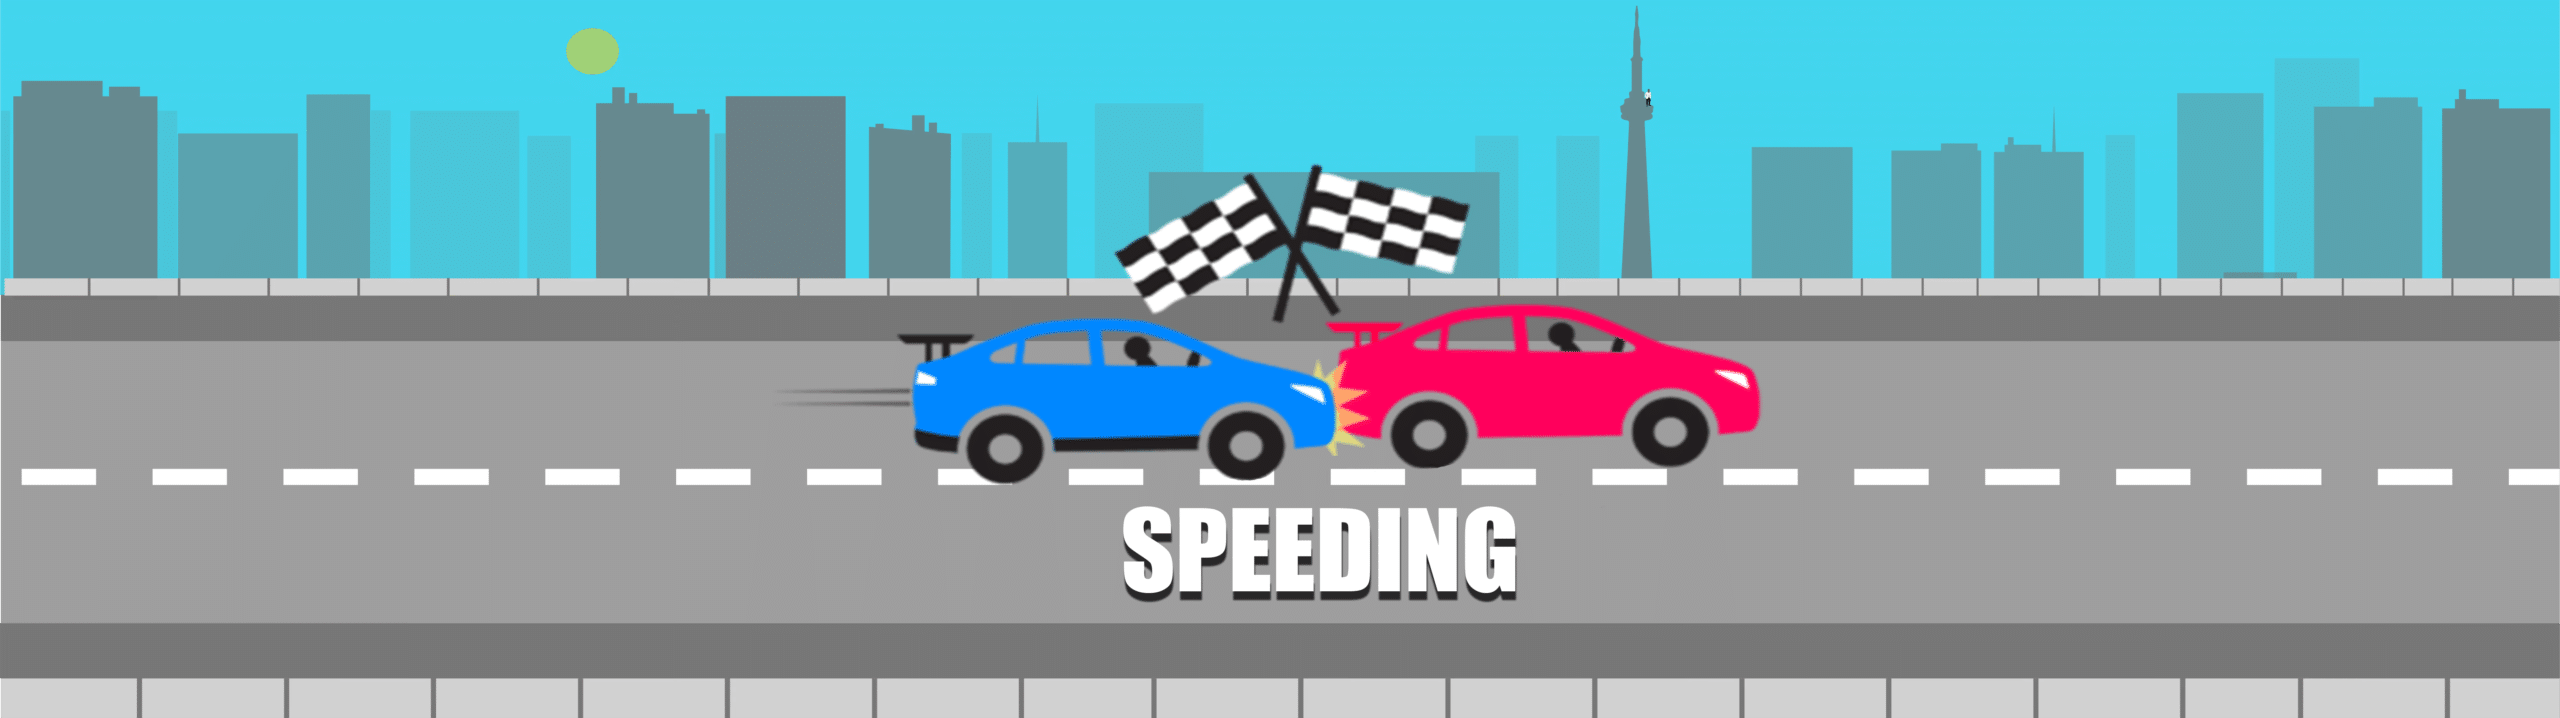 SpeedingPage